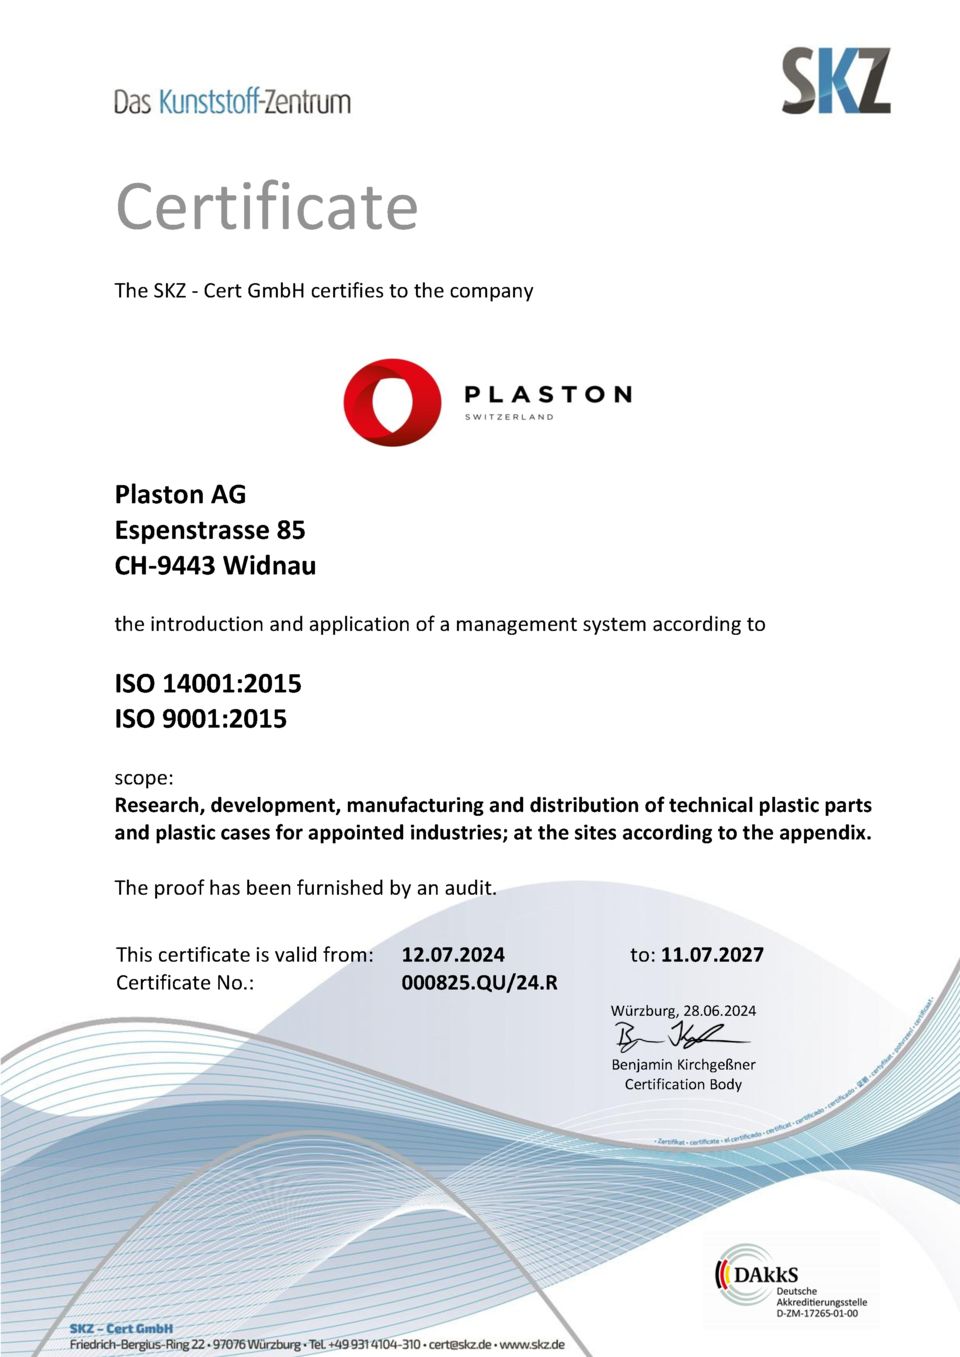 PLASTON ISO Certificate 9001:2015 & 14001:2015   